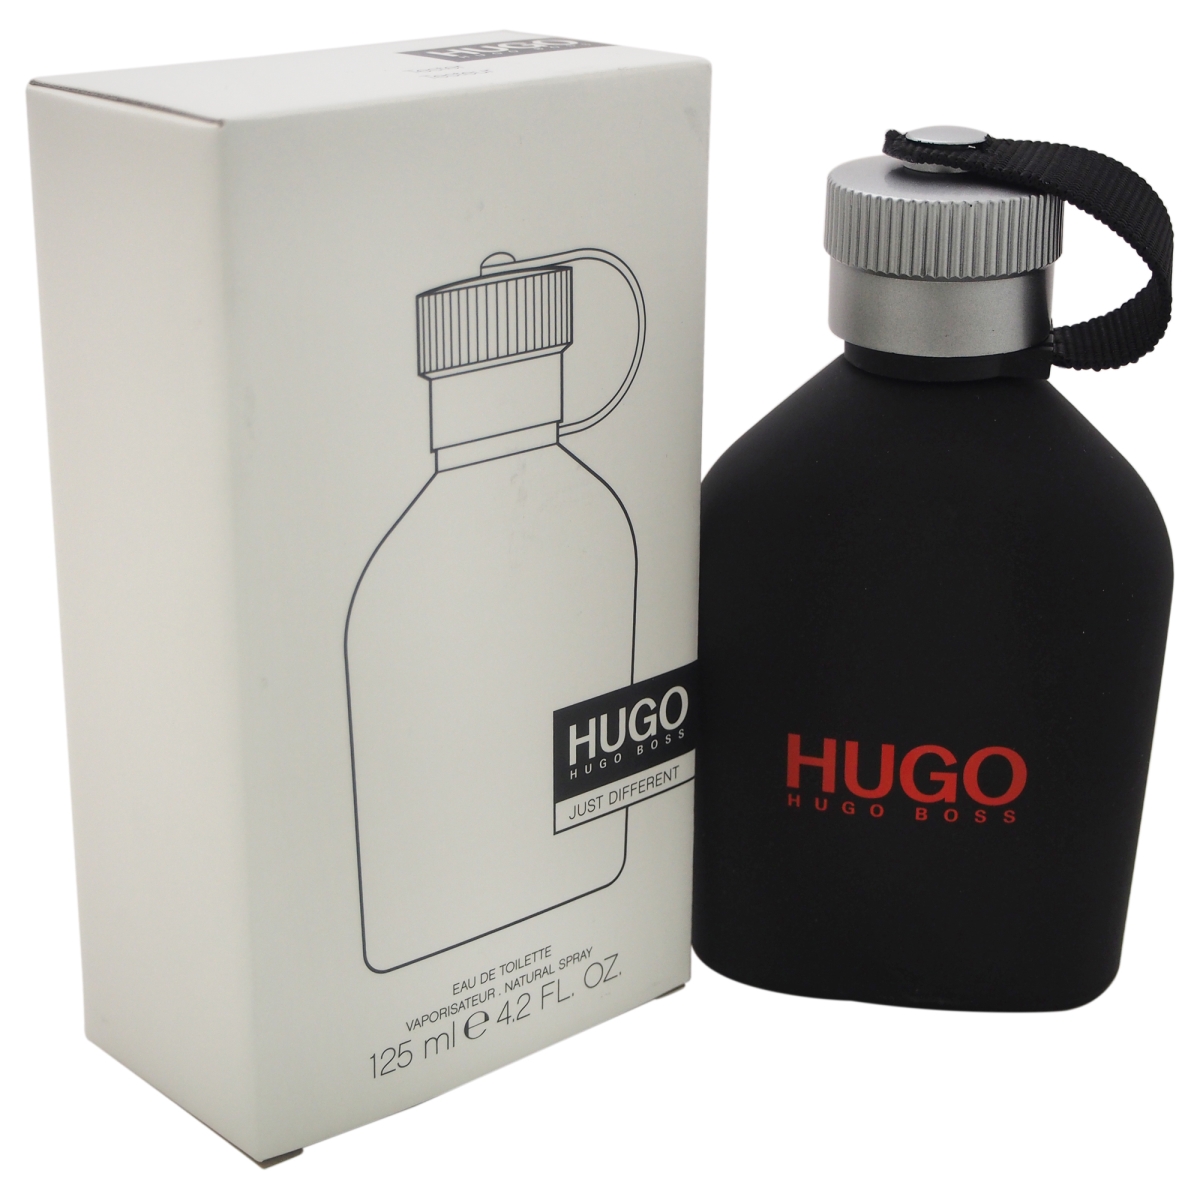 M-t-2155 4.2 Oz Hugo Just Different Edt Spray For Men